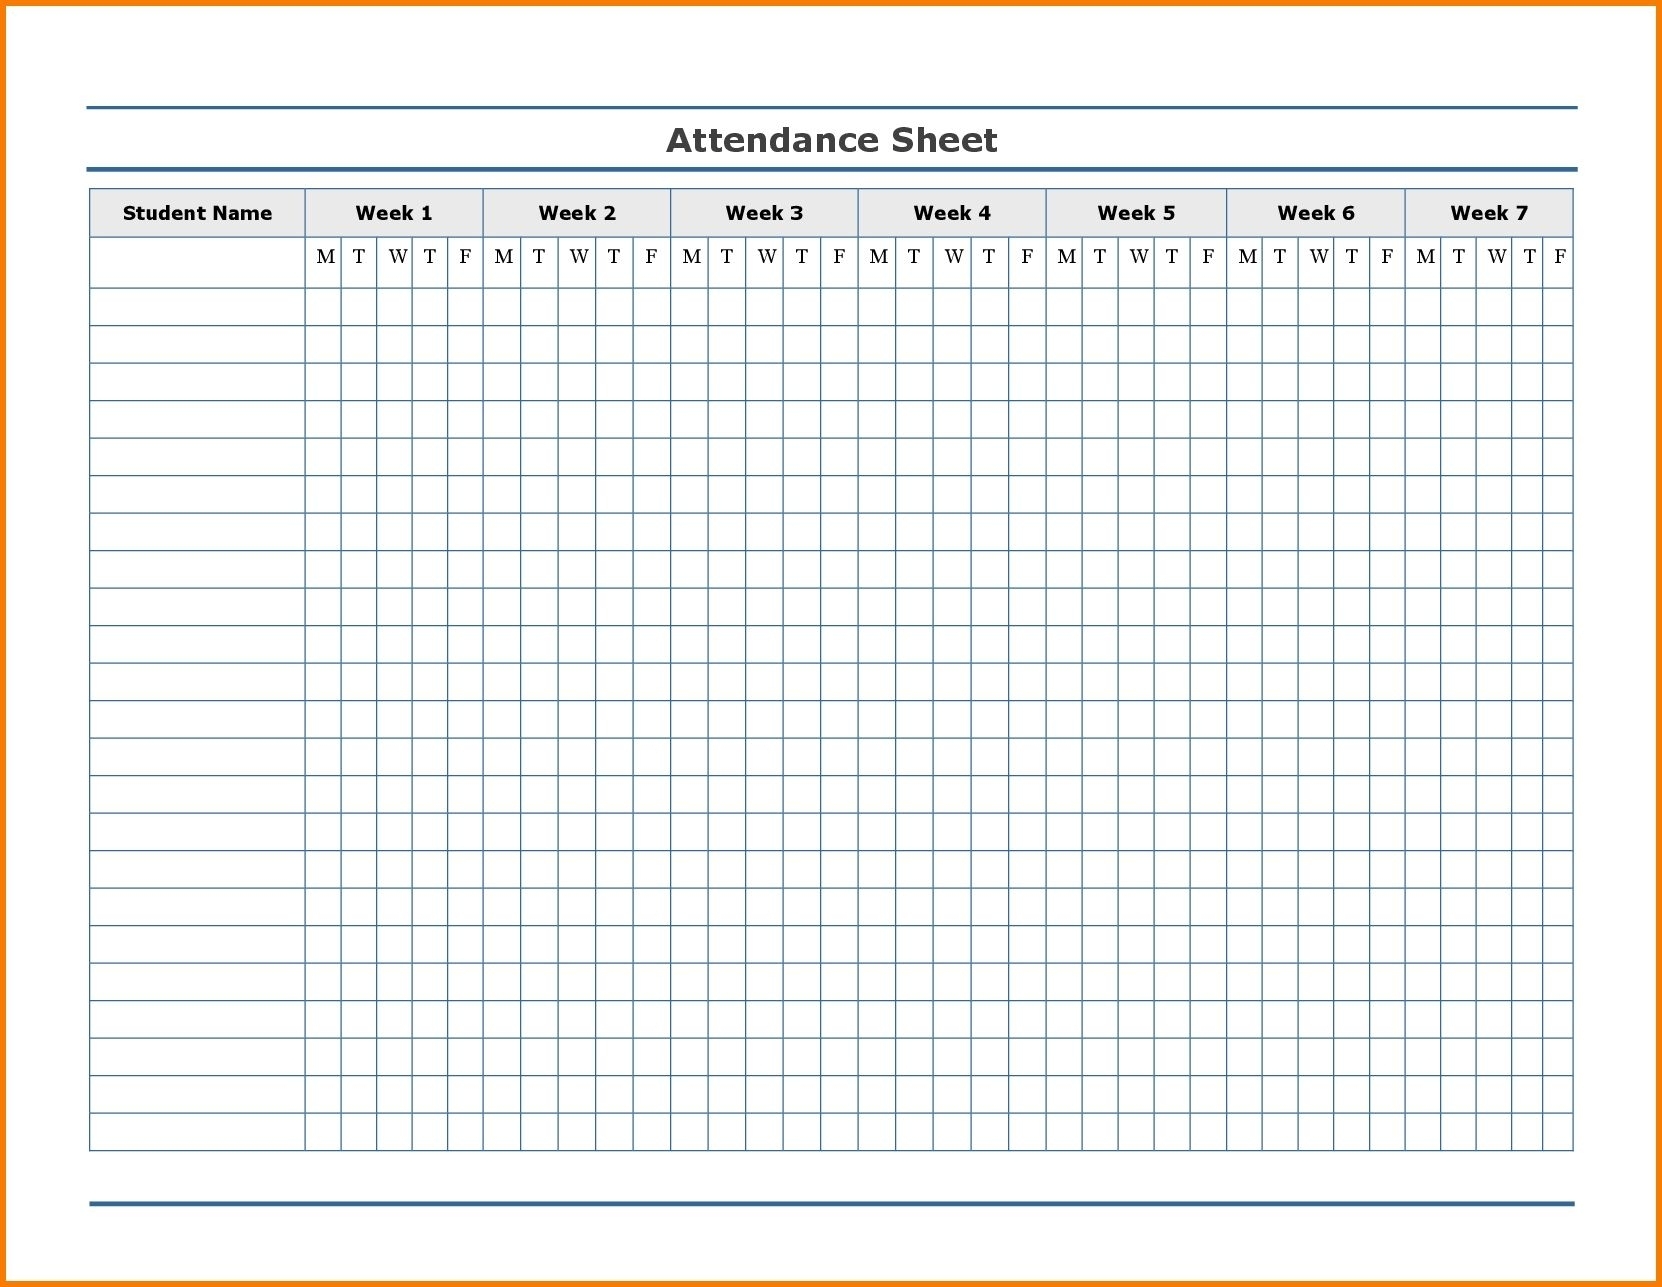 Free Employee Attendance Calendar | Employee Tracker Templates 2019 within Employee Attendance Calendar 2020 Prntable